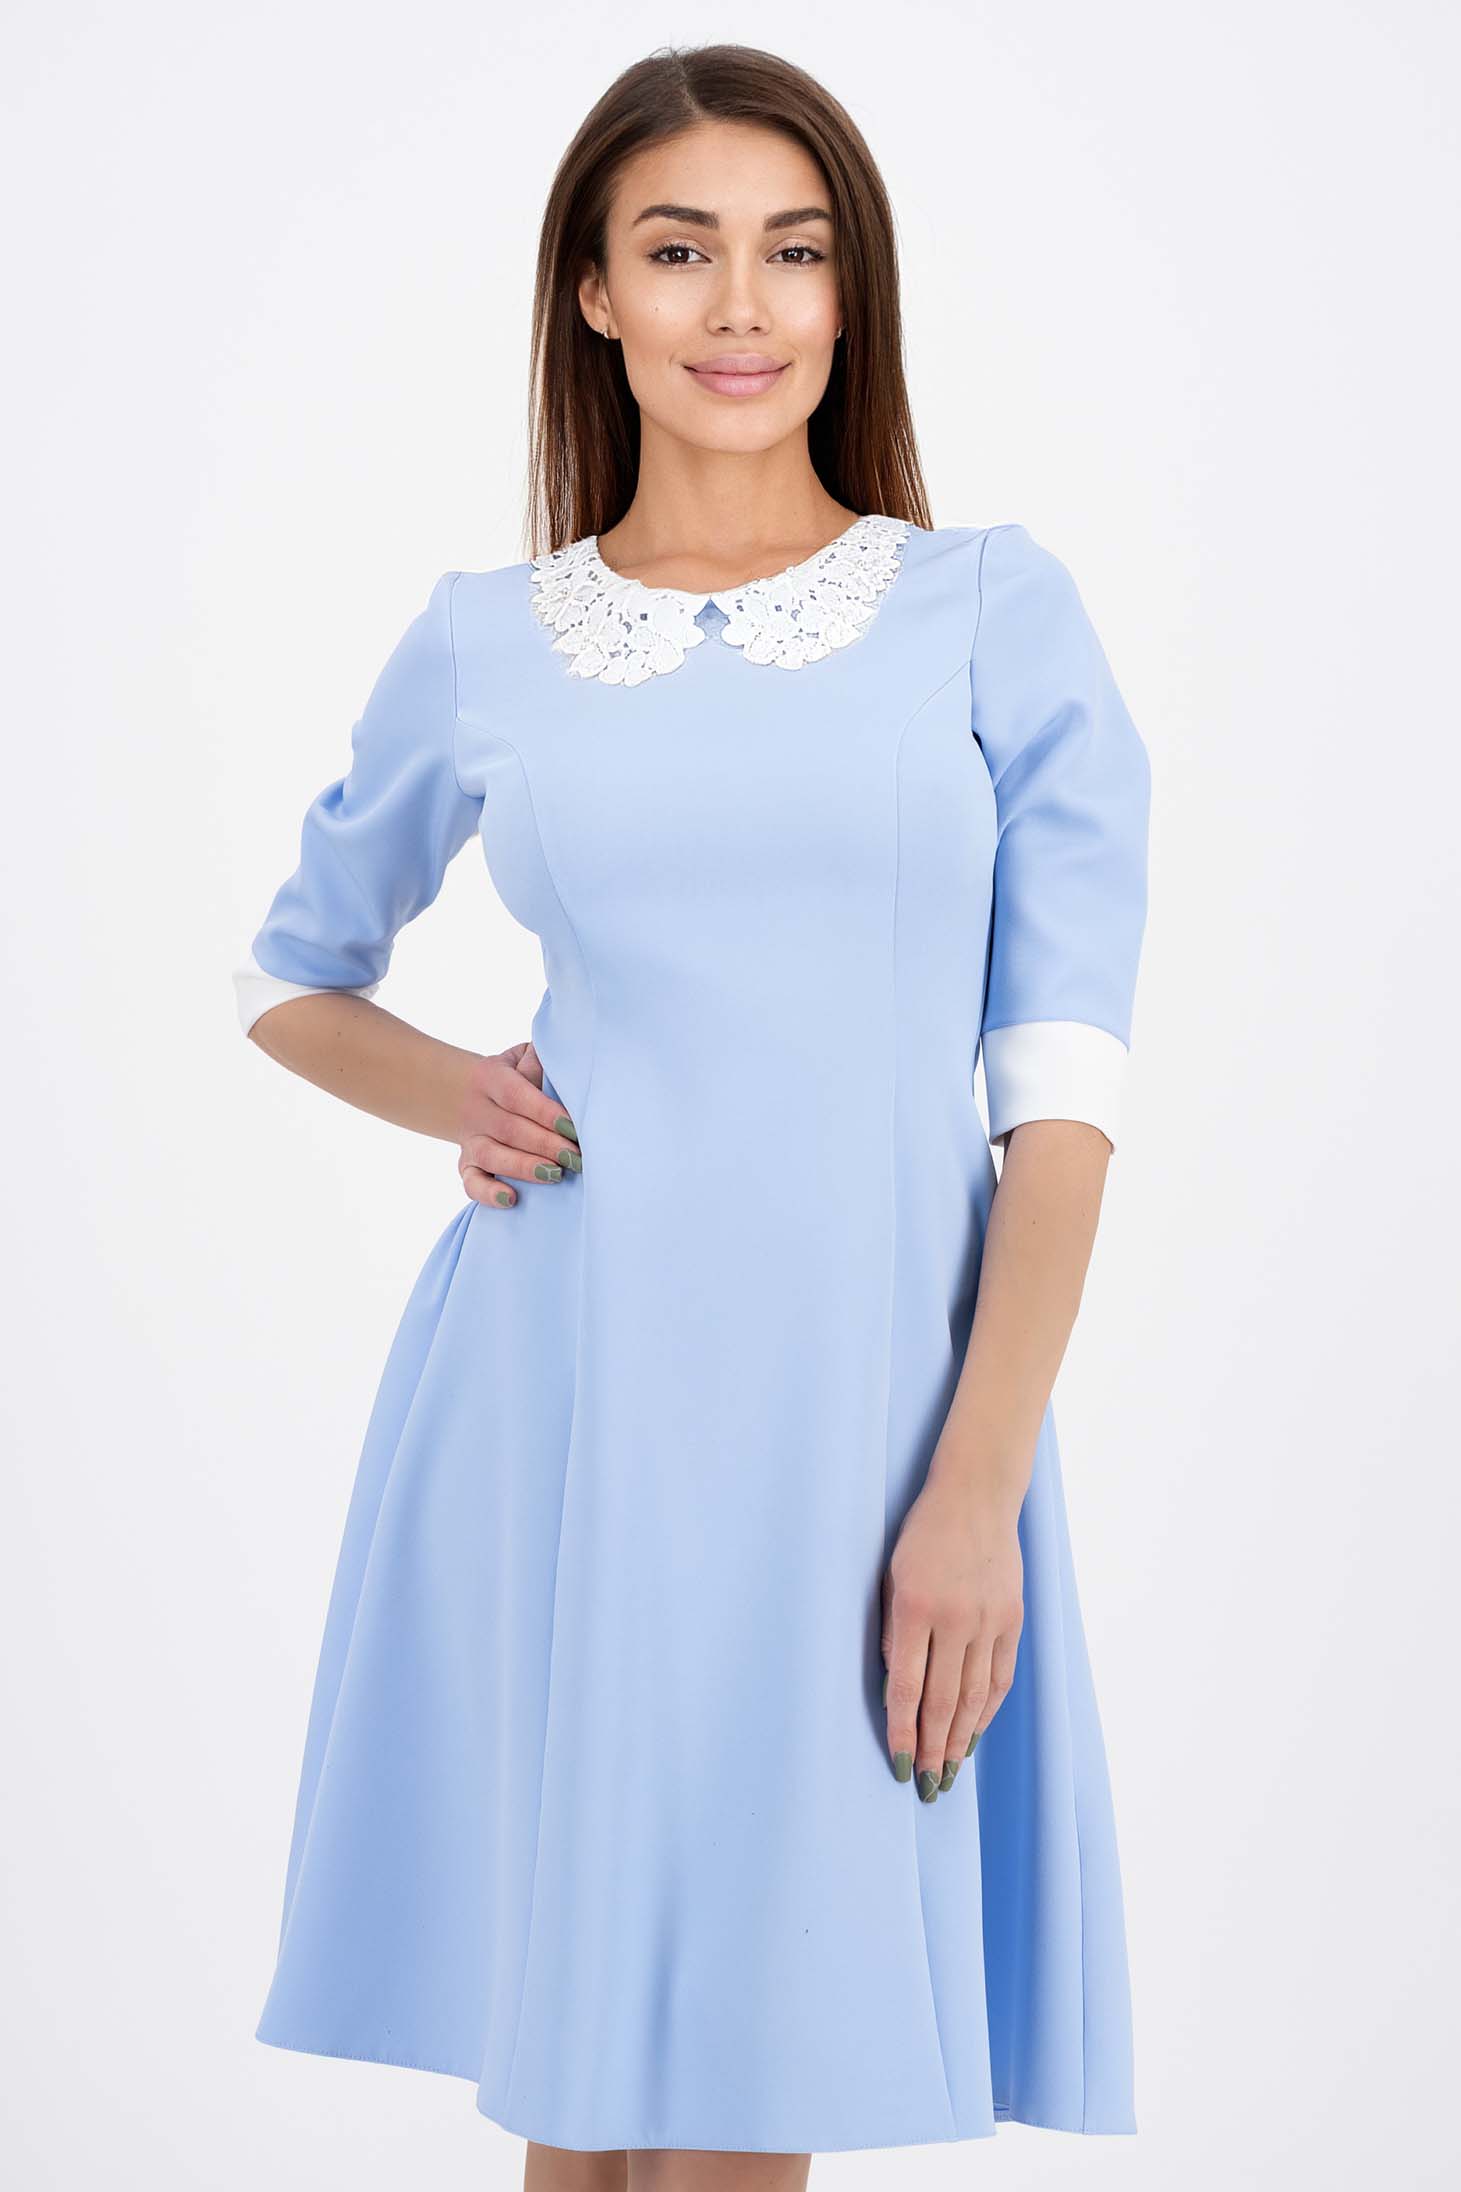 Rochie din stofa usor elastica albastru-deschis in clos cu guler decorativ - StarShinerS 1 - StarShinerS.ro